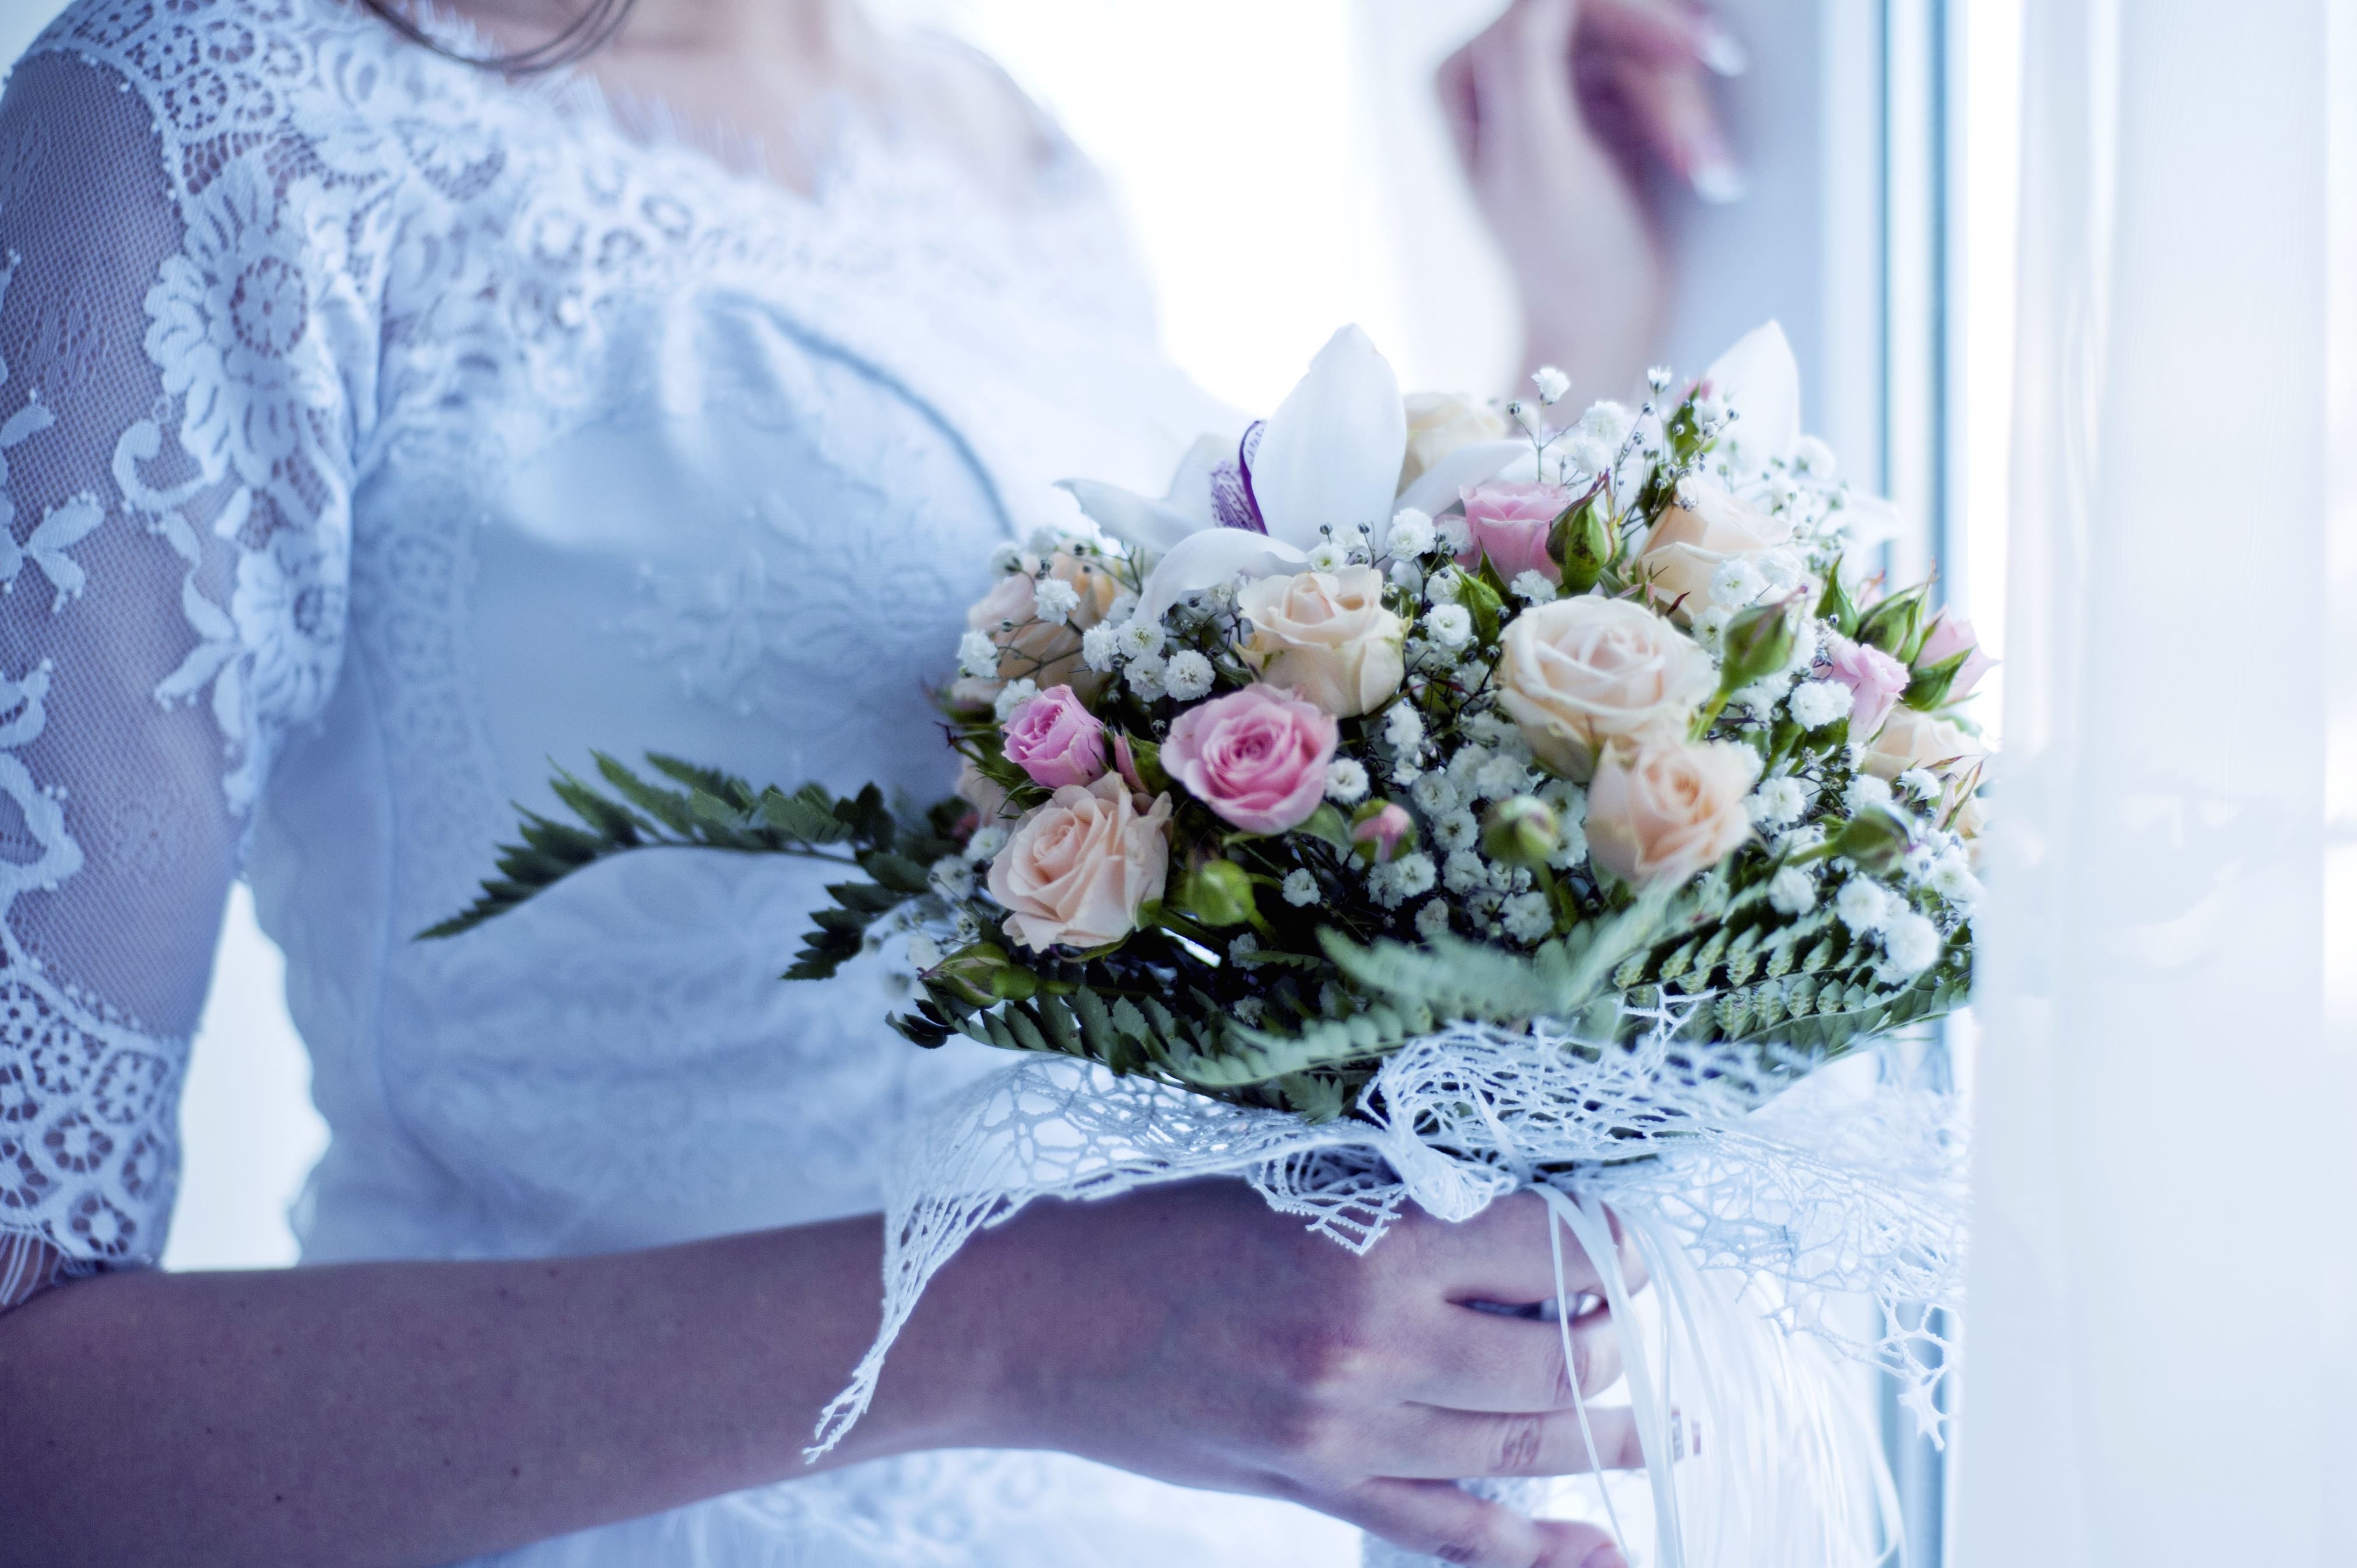 Free picture: bride, wedding dress, beautiful, blooming flowers, woman